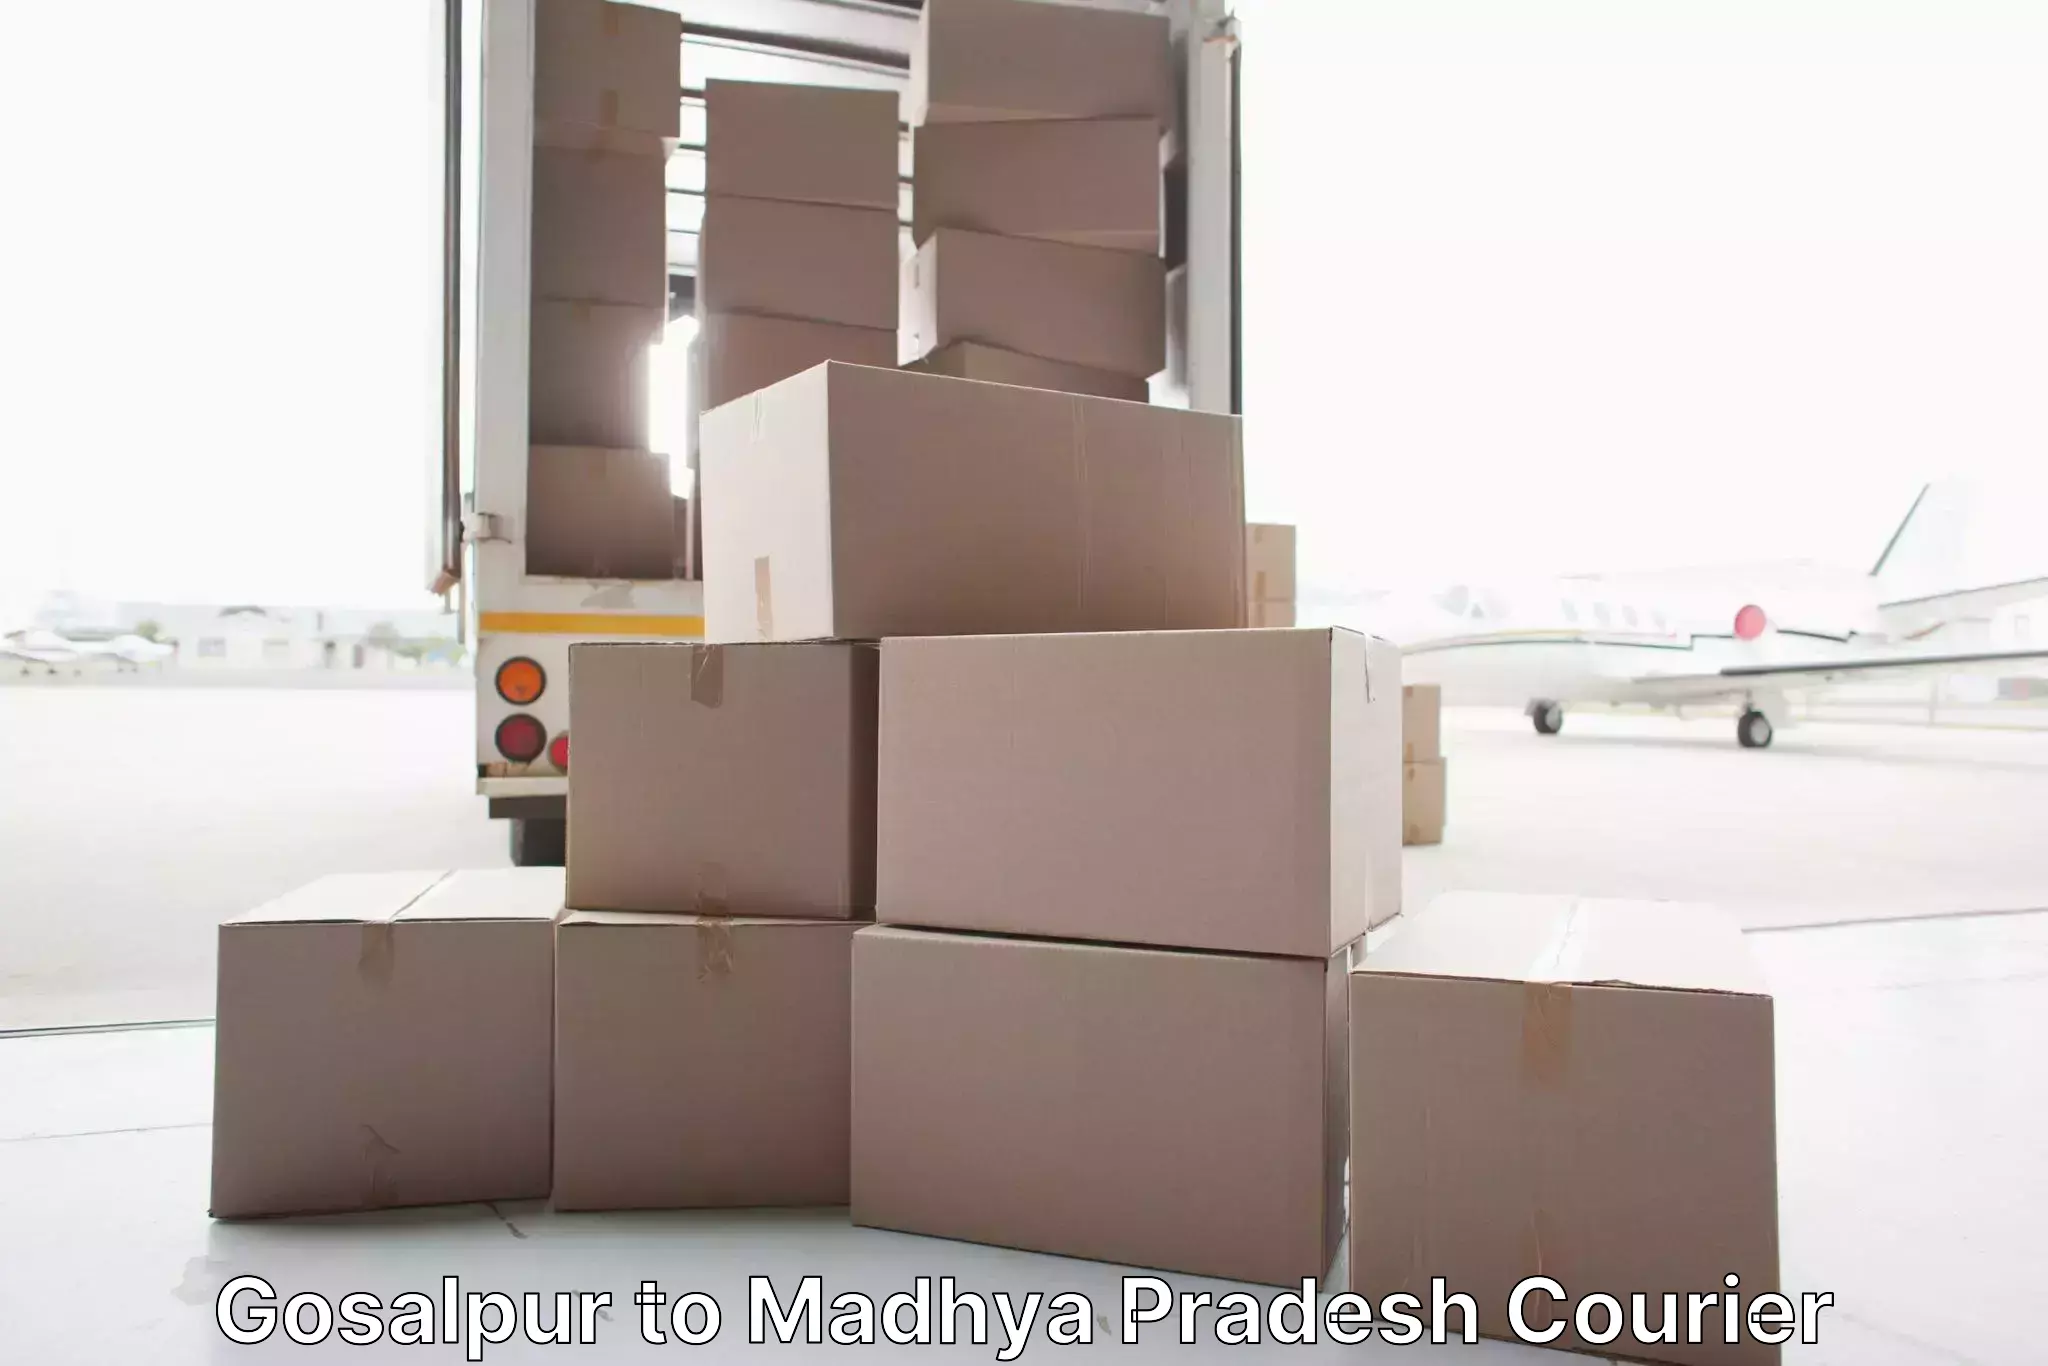 Quality moving and storage Gosalpur to Itarsi